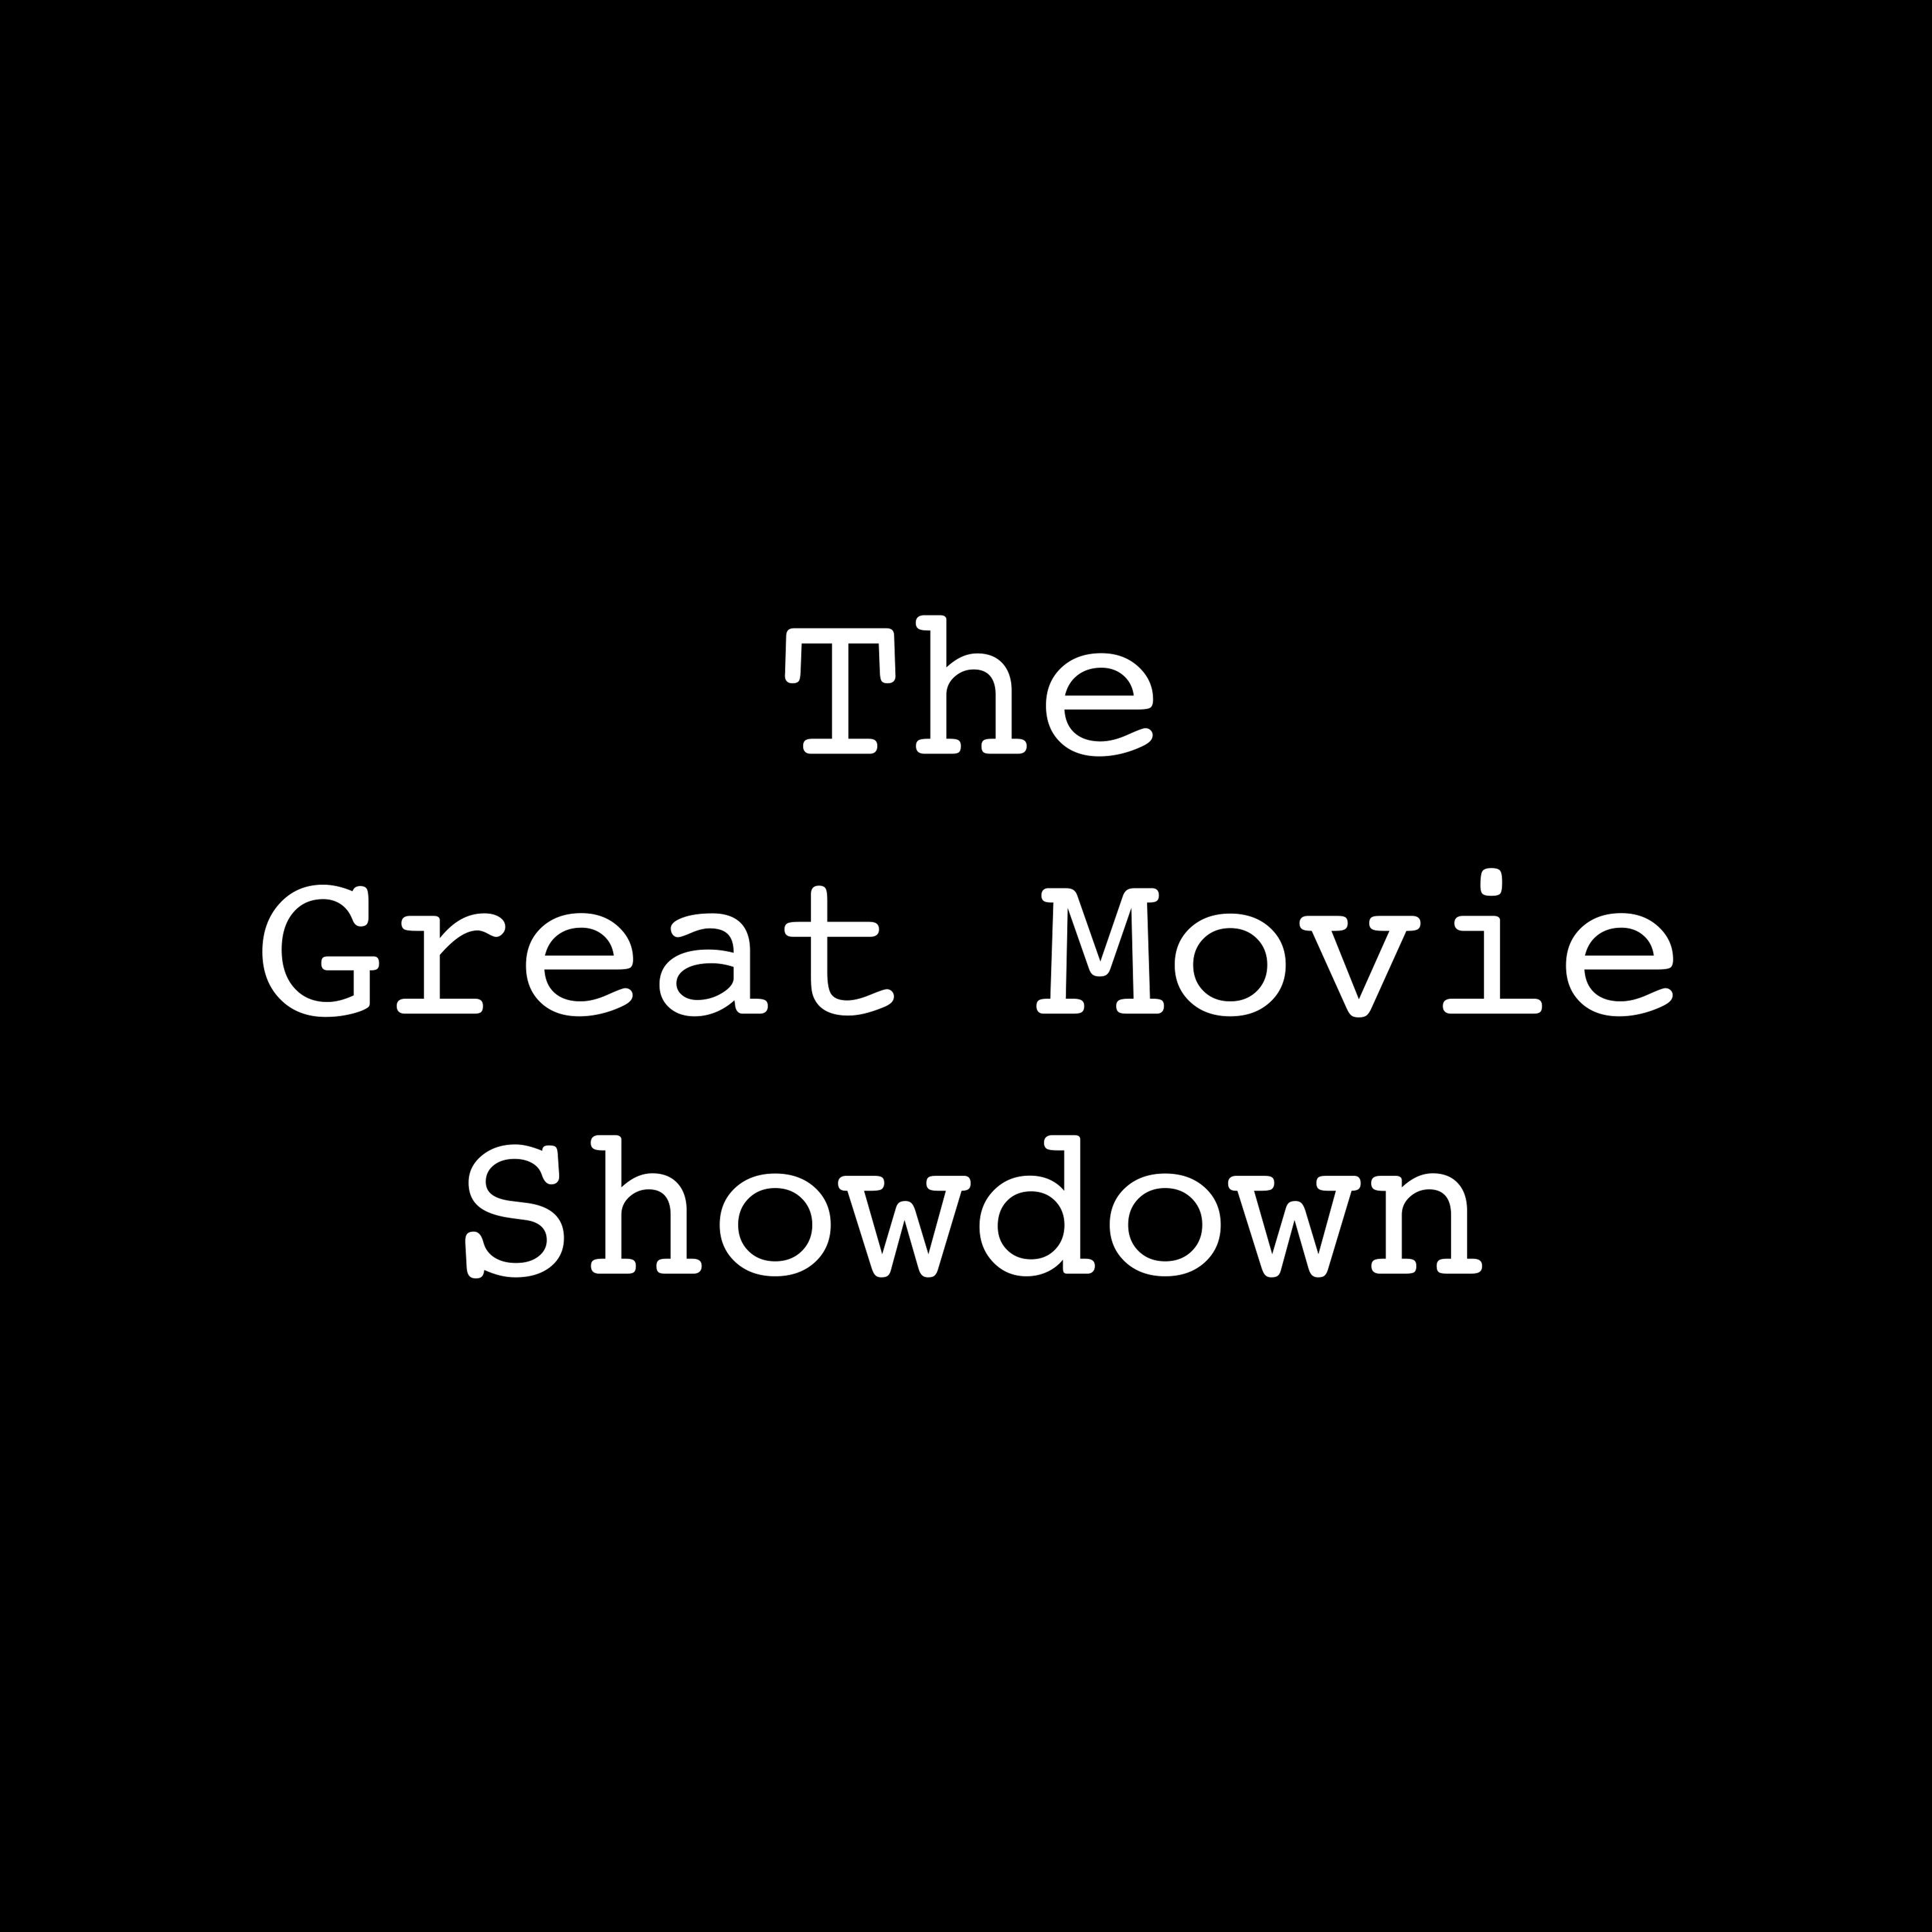 The Great Movie Showdown